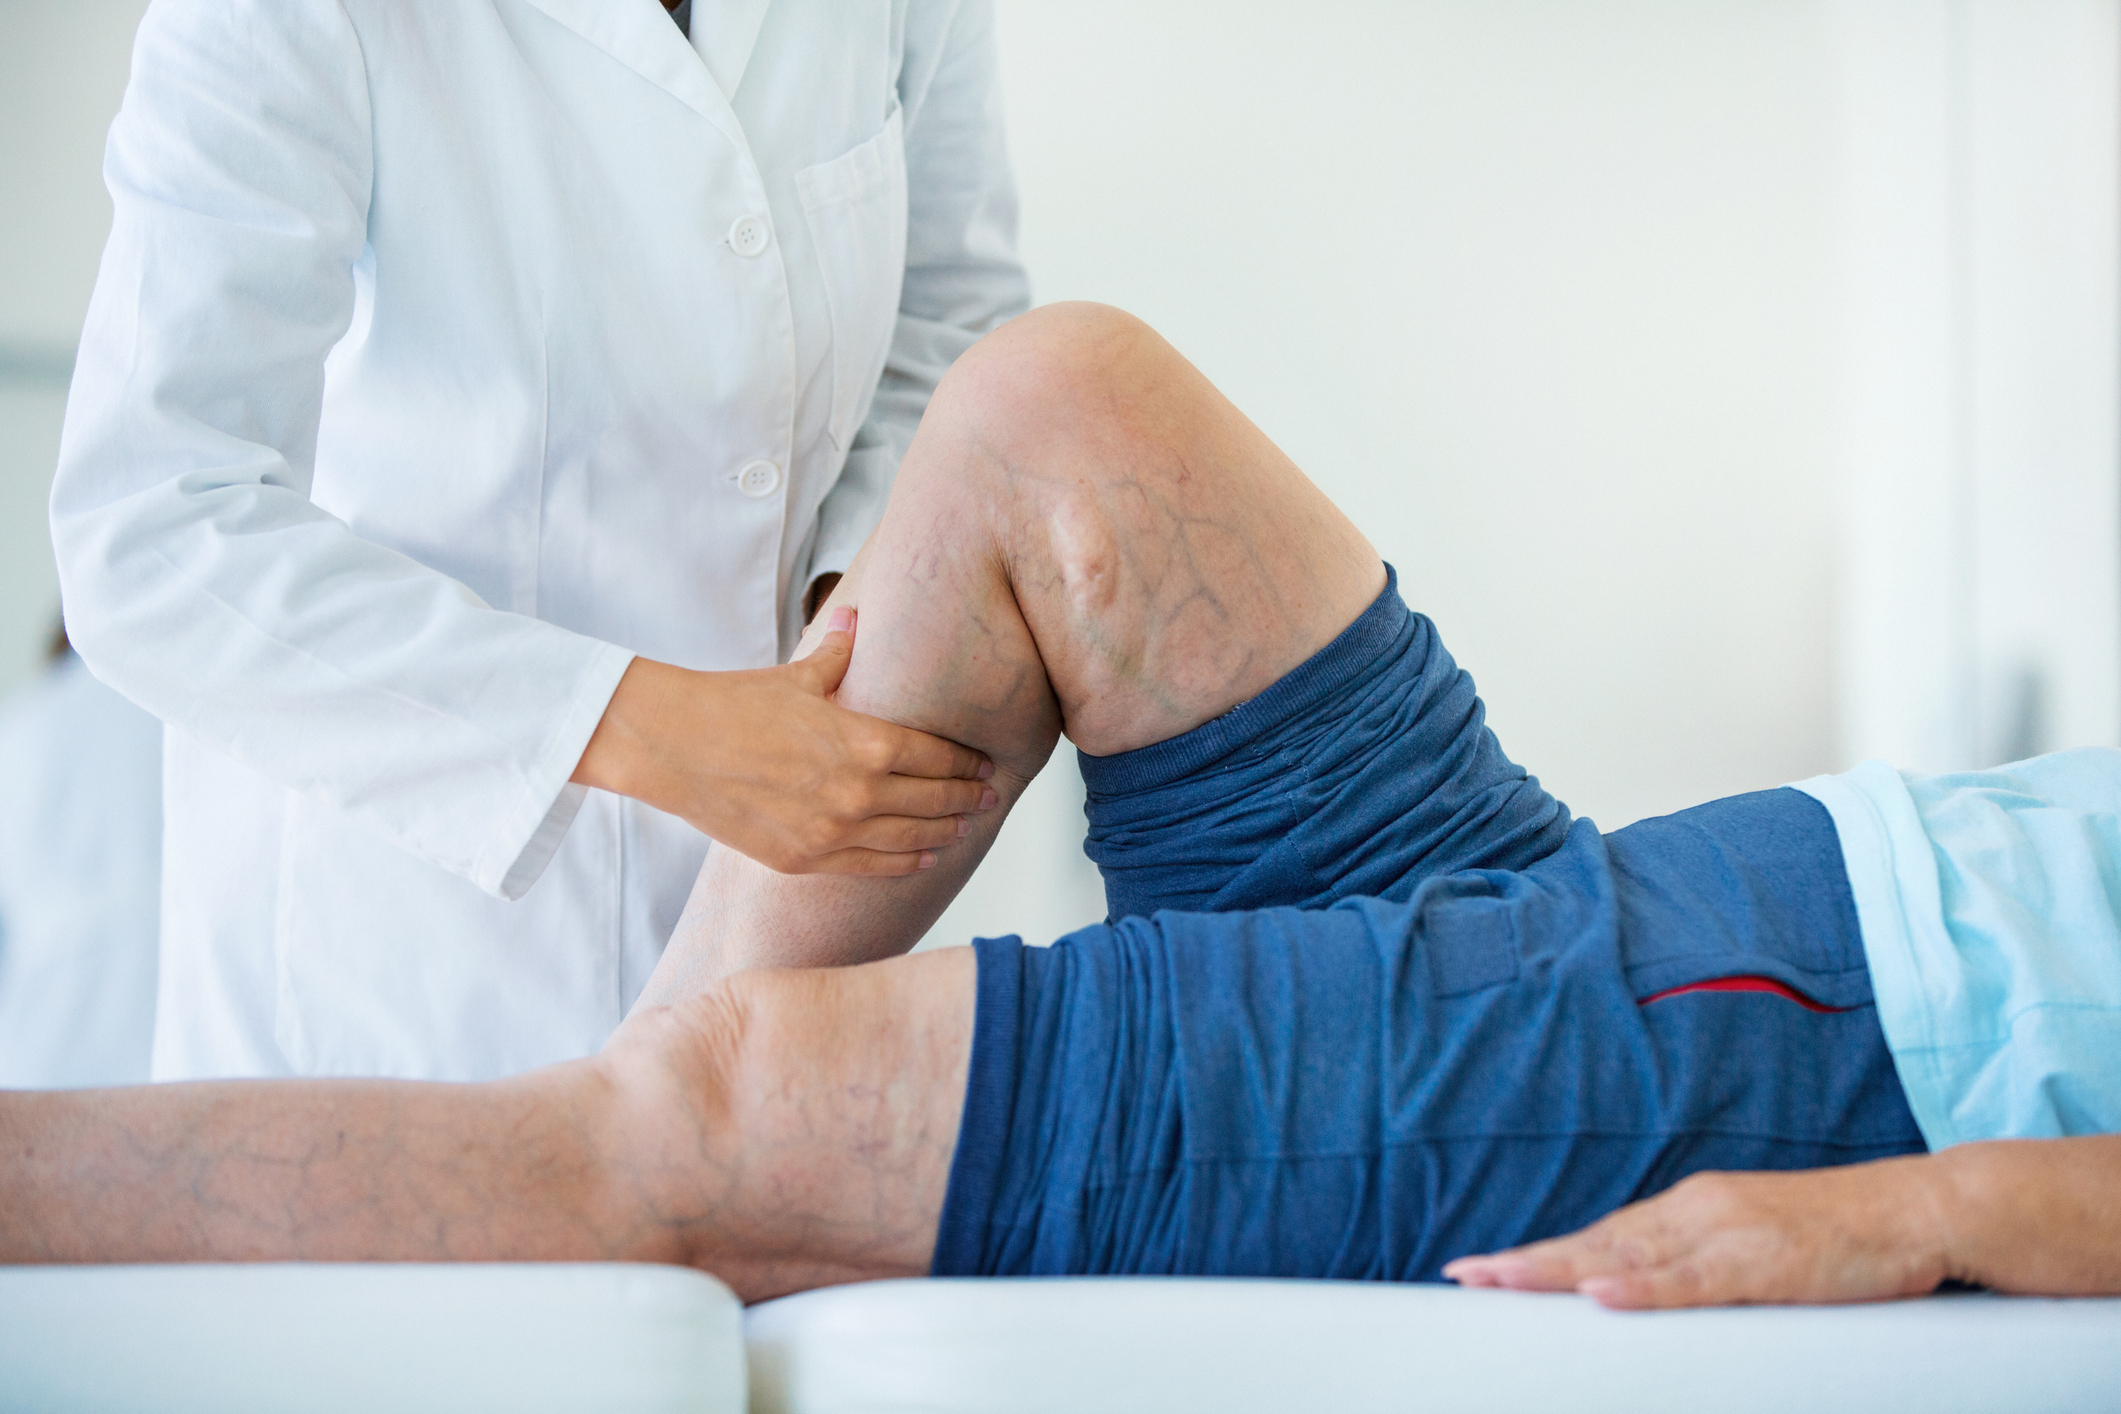 Senior woman receiving vein massage treatment on legs